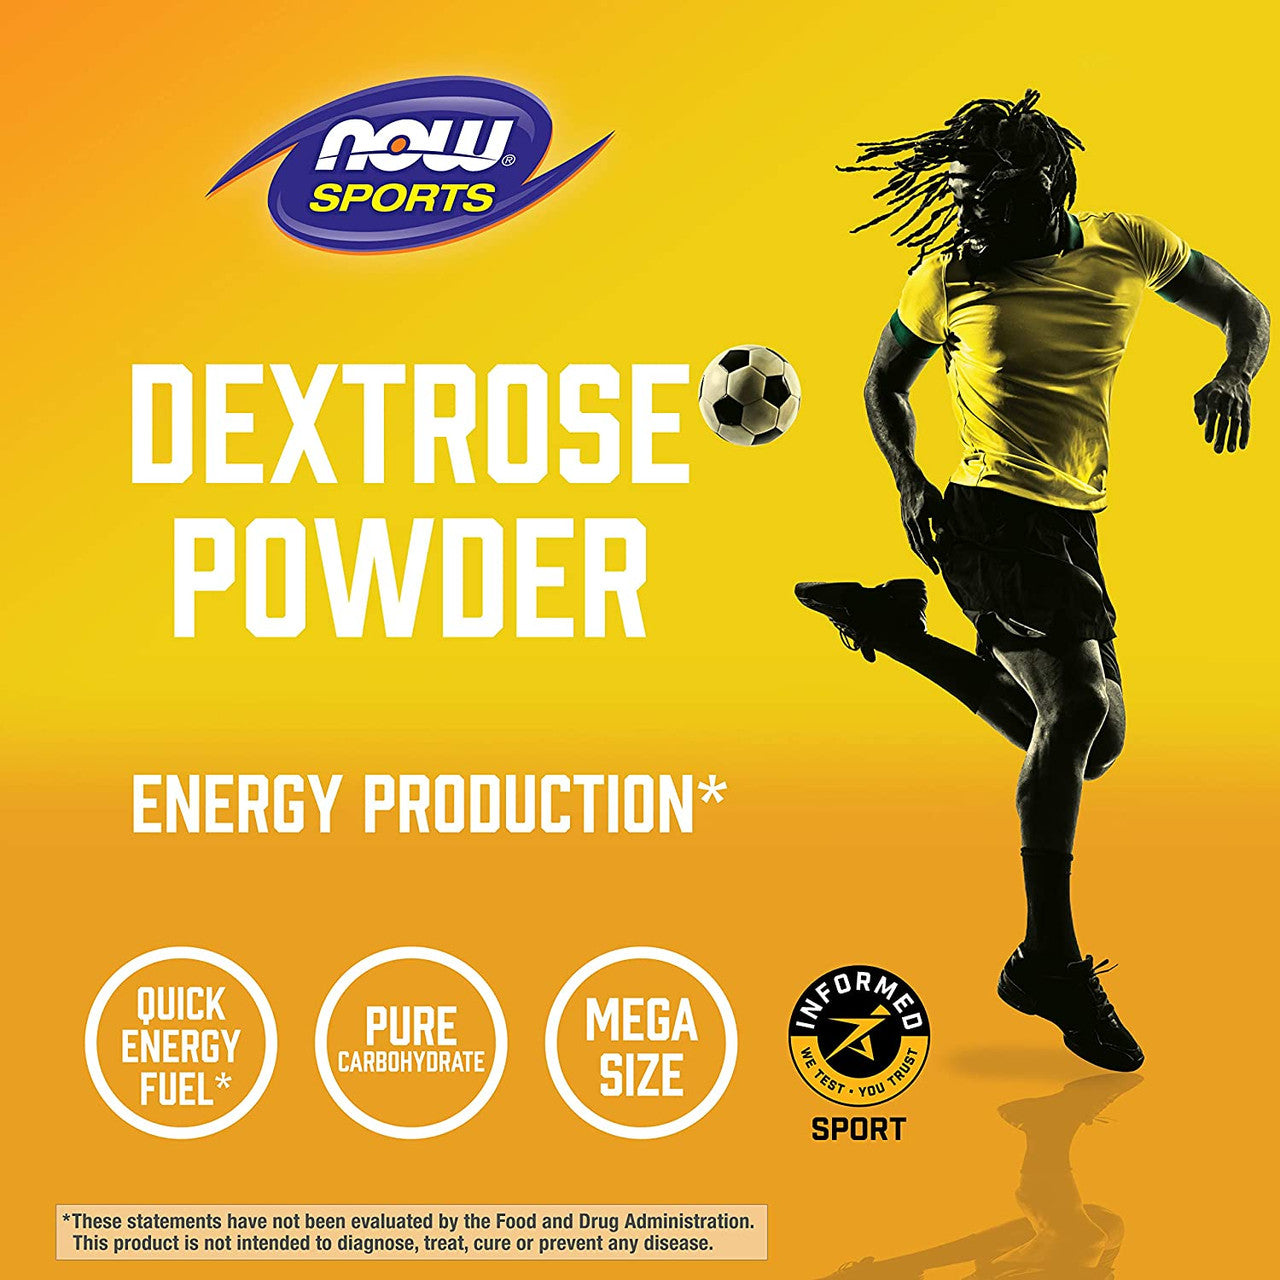 Now Dextrose Powder energy production